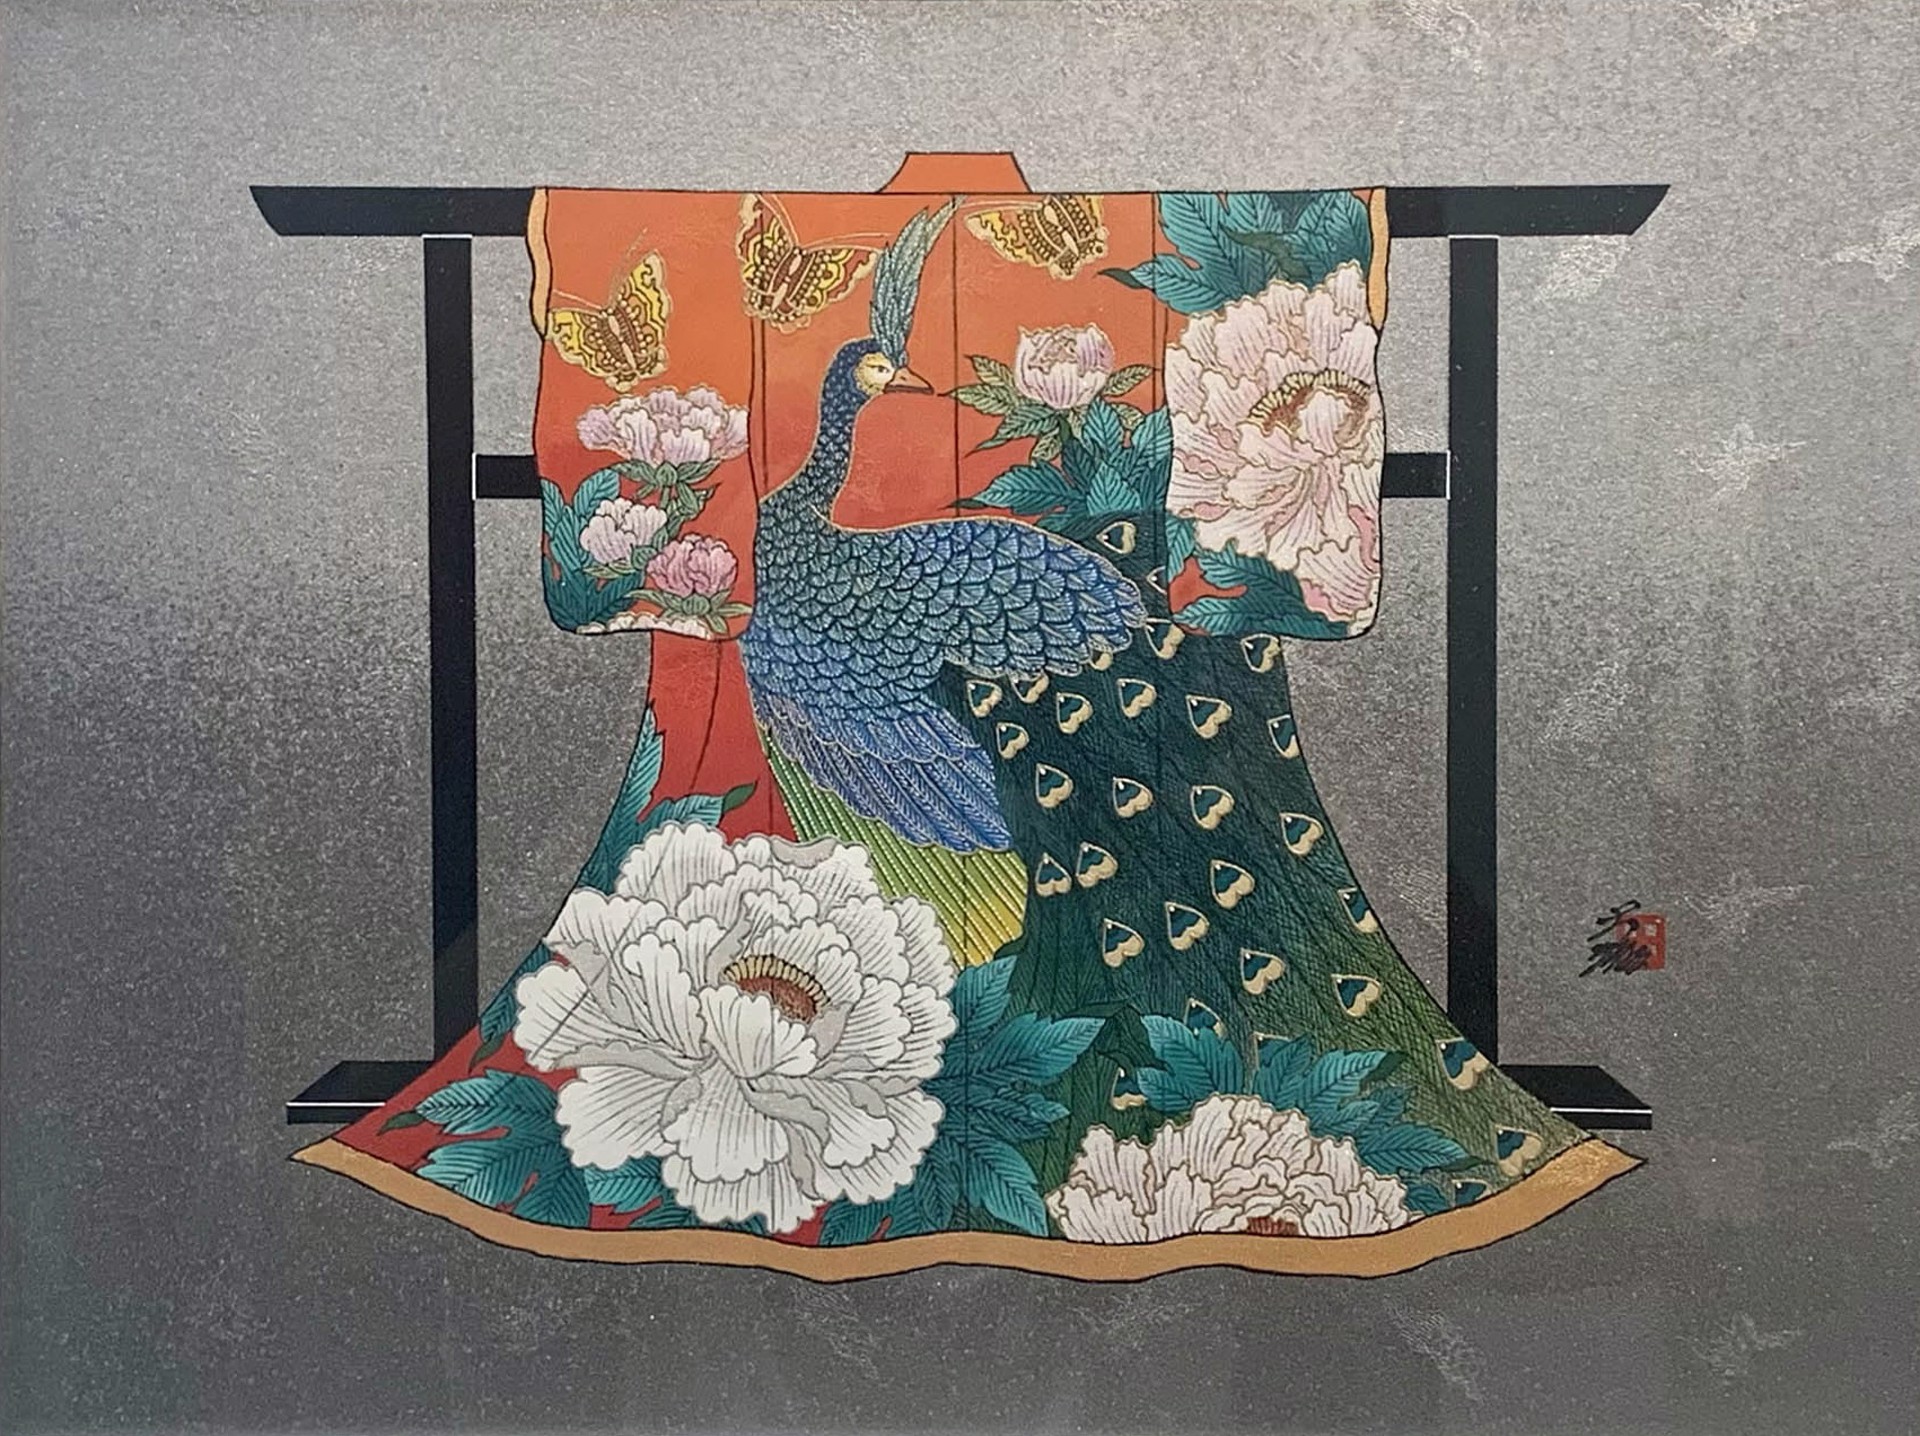 Fantasia Kimono 3 by Hisashi Otsuka